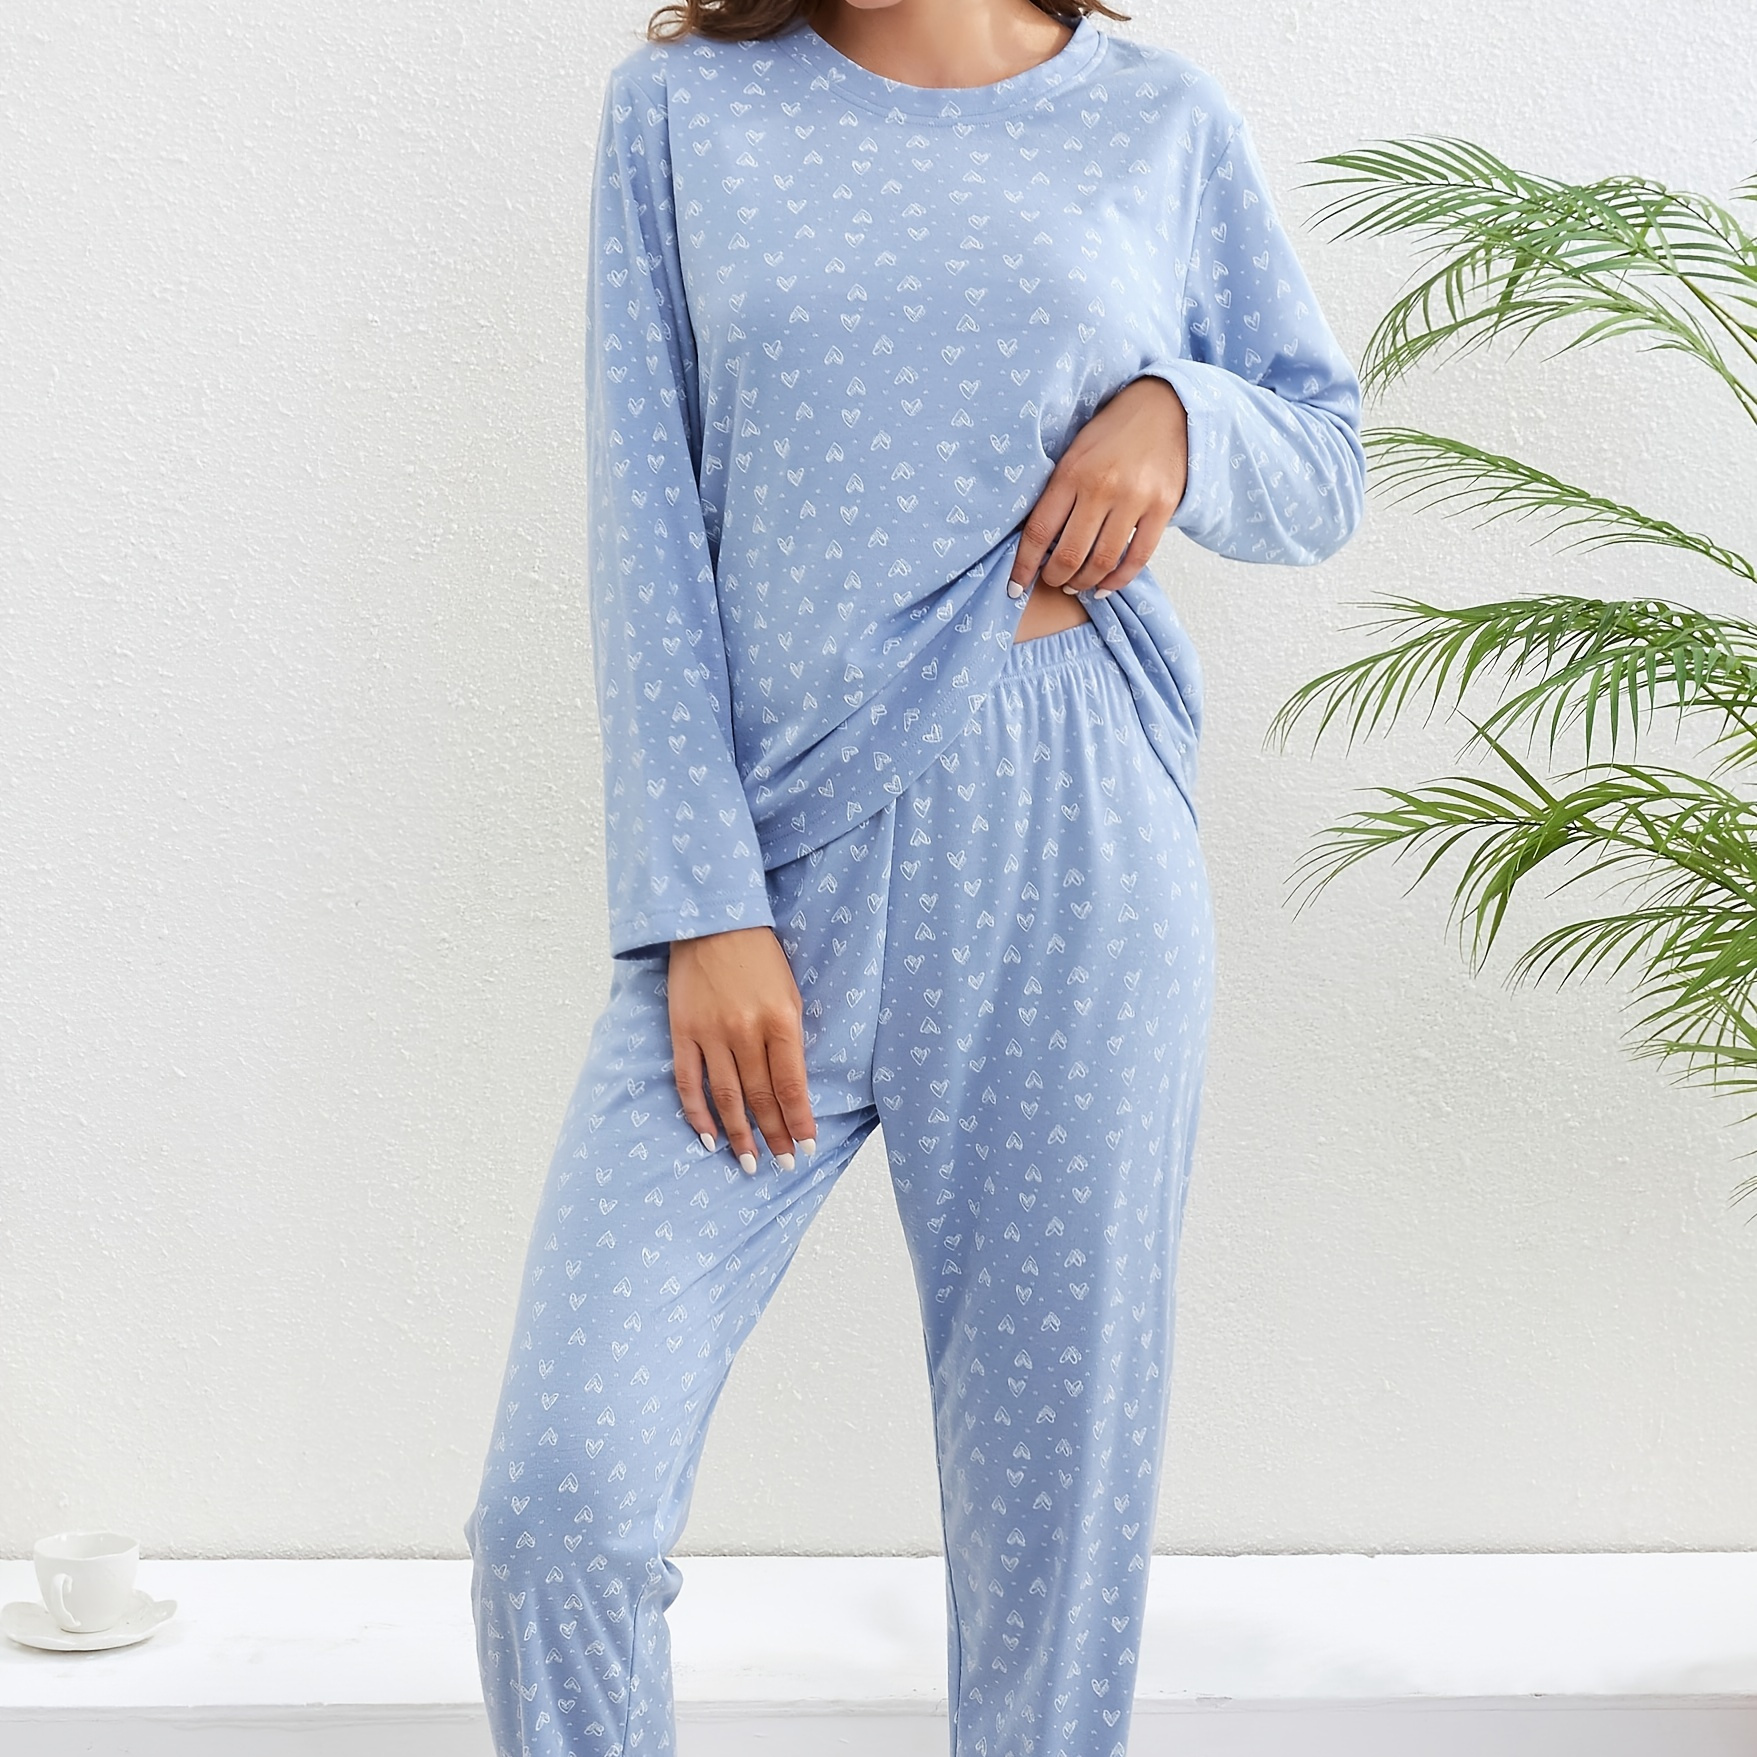 

Heart Print Pajama Set, Long Sleeve Crew Neck Top & Elastic Waistband Pants, Women's Sleepwear & Loungewear